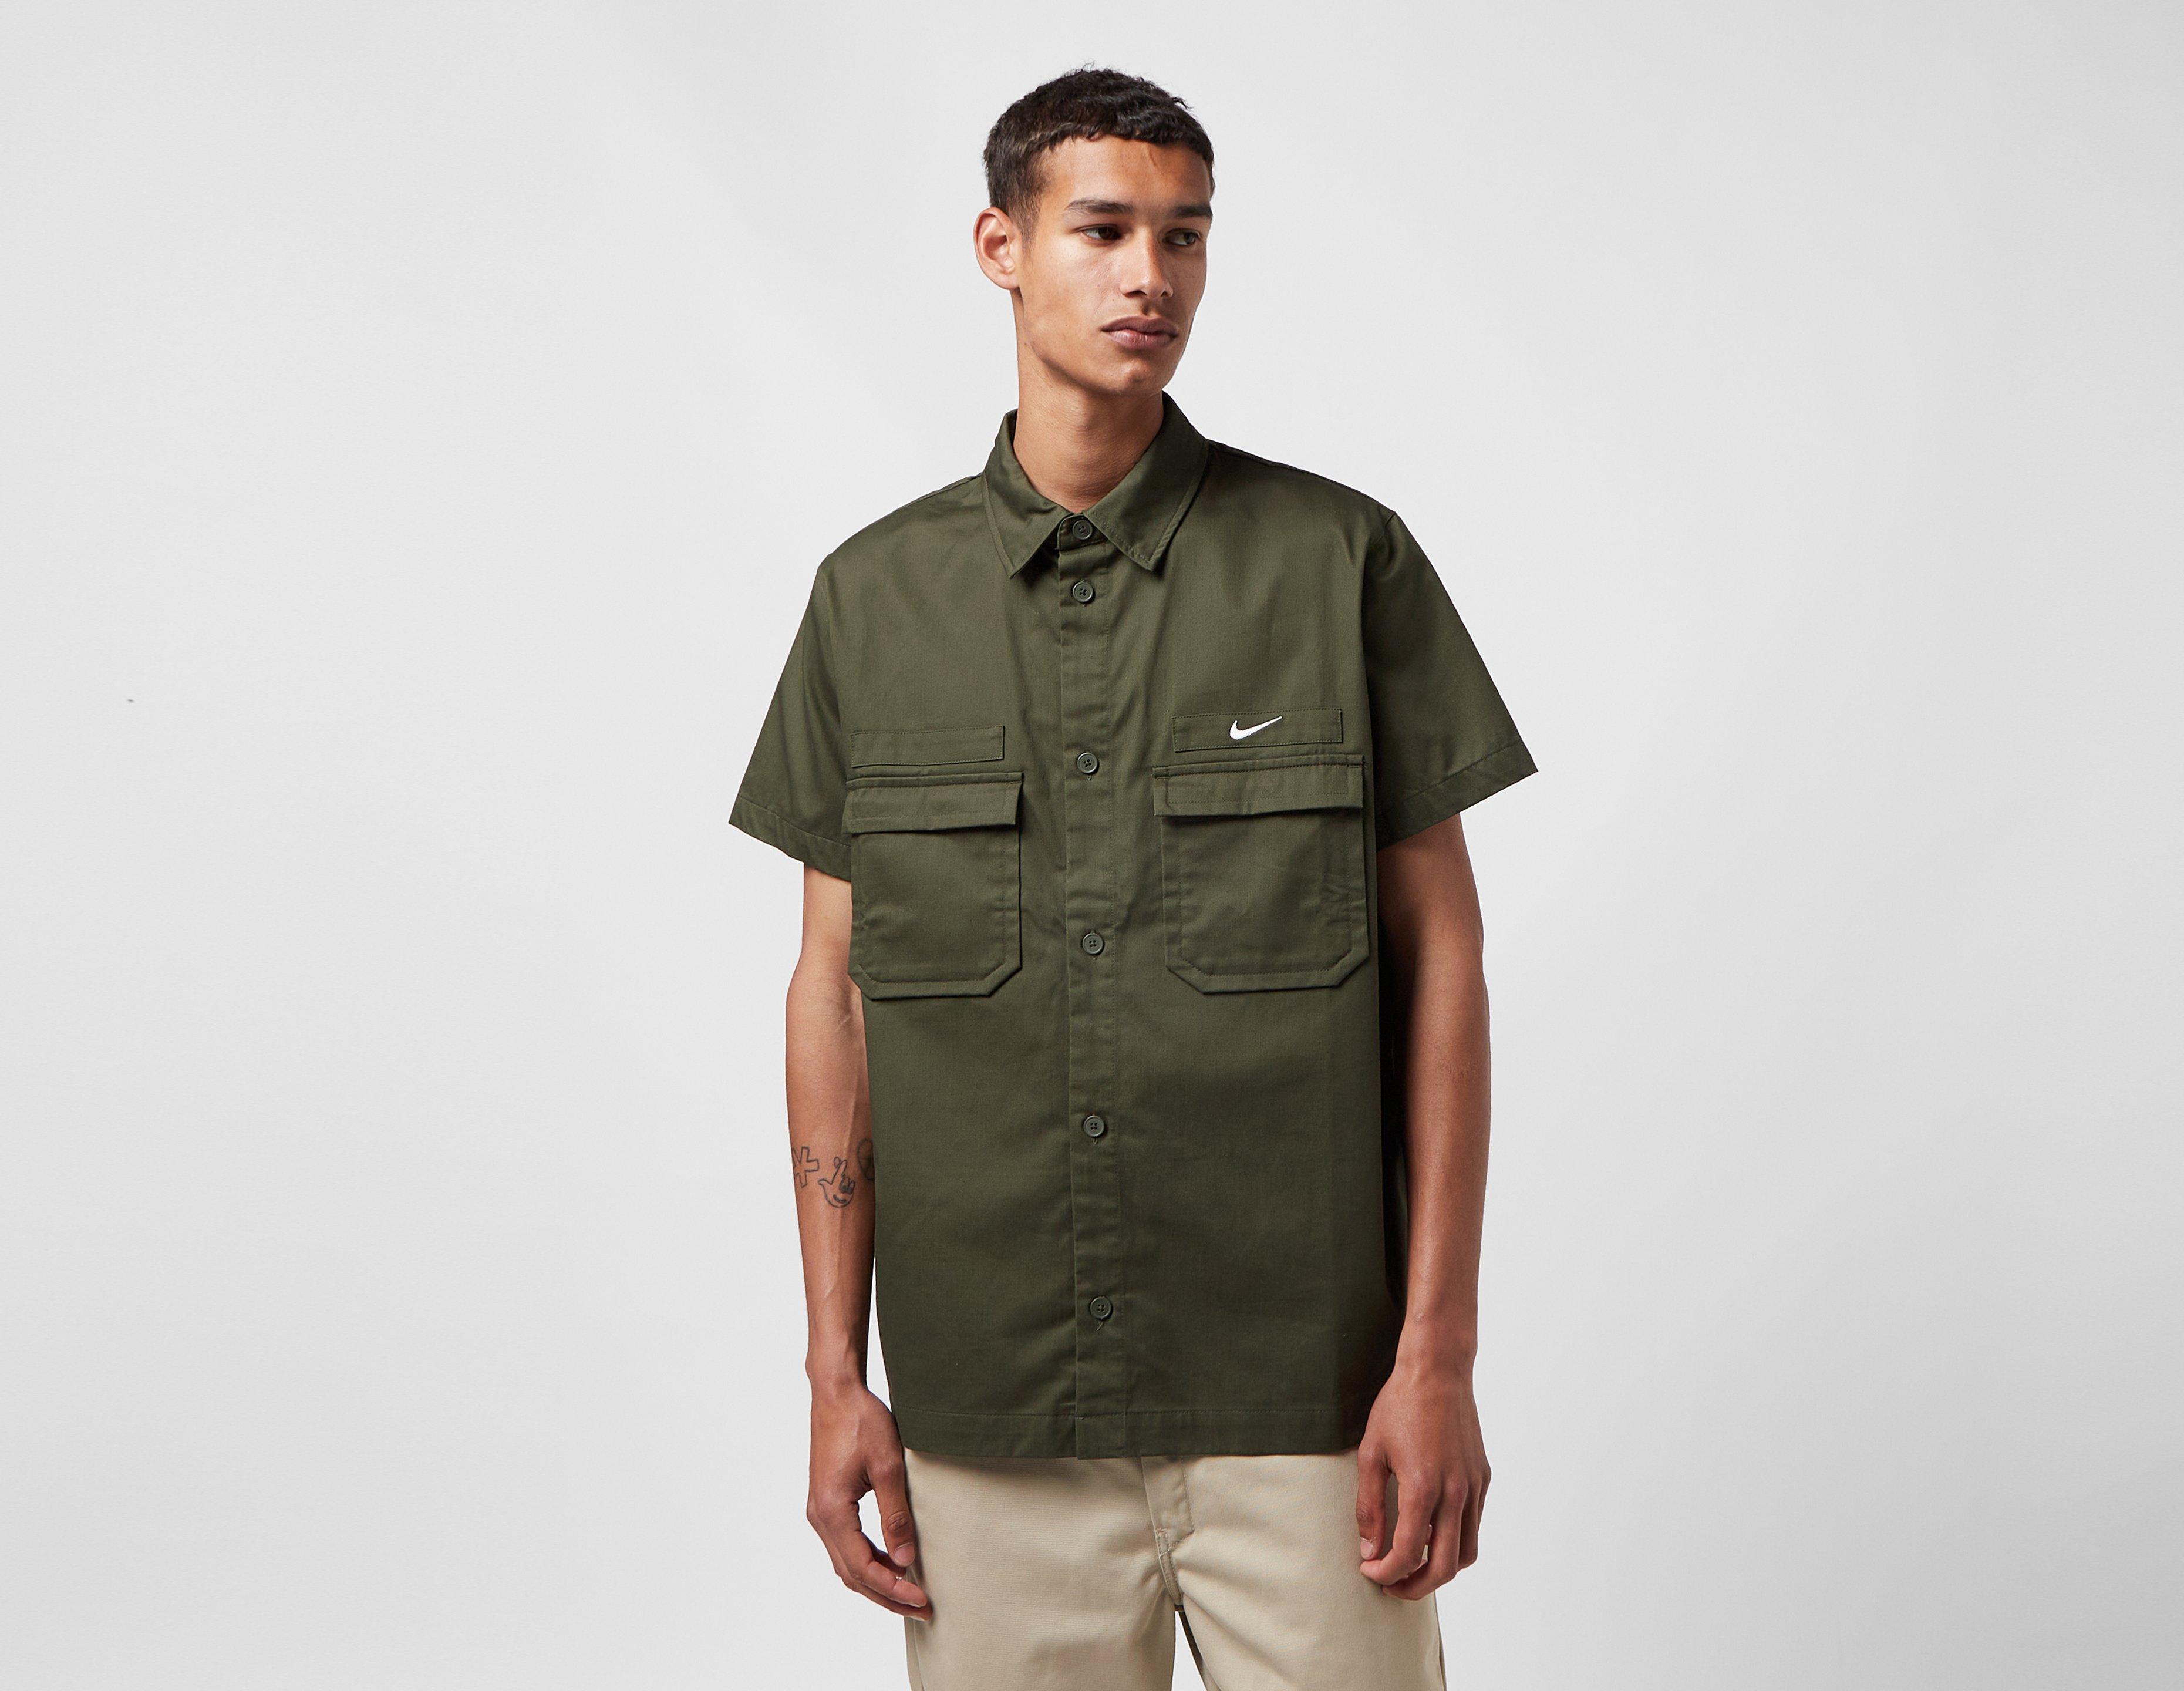 2018 viotech Military Green Shirt 2015 Life Short Healthdesign? - - 2013 | Nike free list Woven dunk Sleeve nike mods